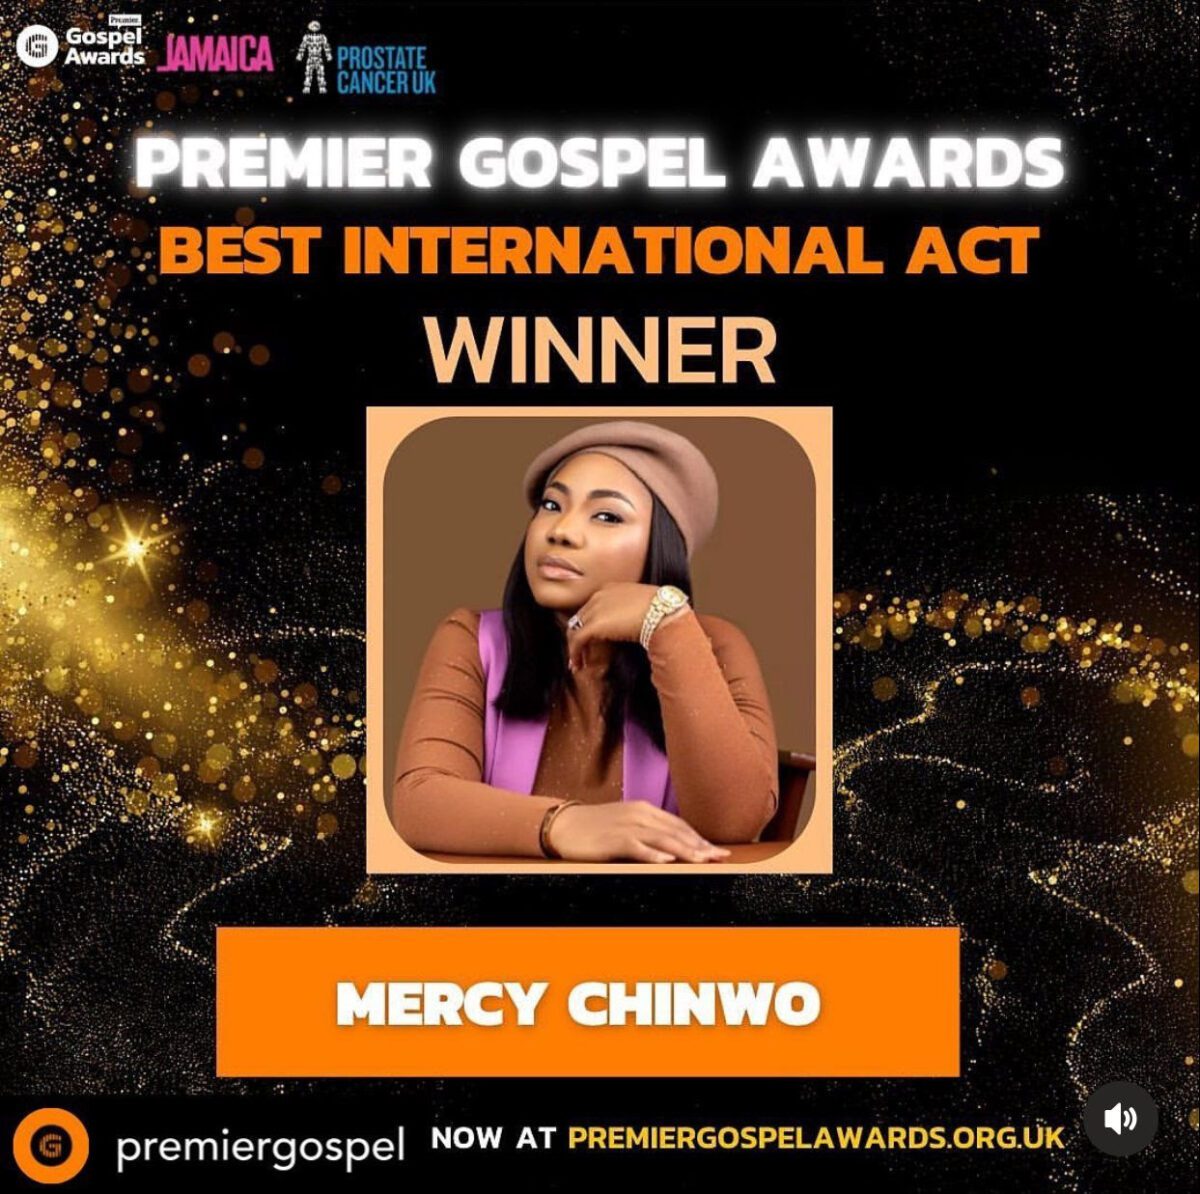 MERCY CHINWO WINS BEST INTERNATIONAL ACT AT PREMIER GOSPEL AWARDS